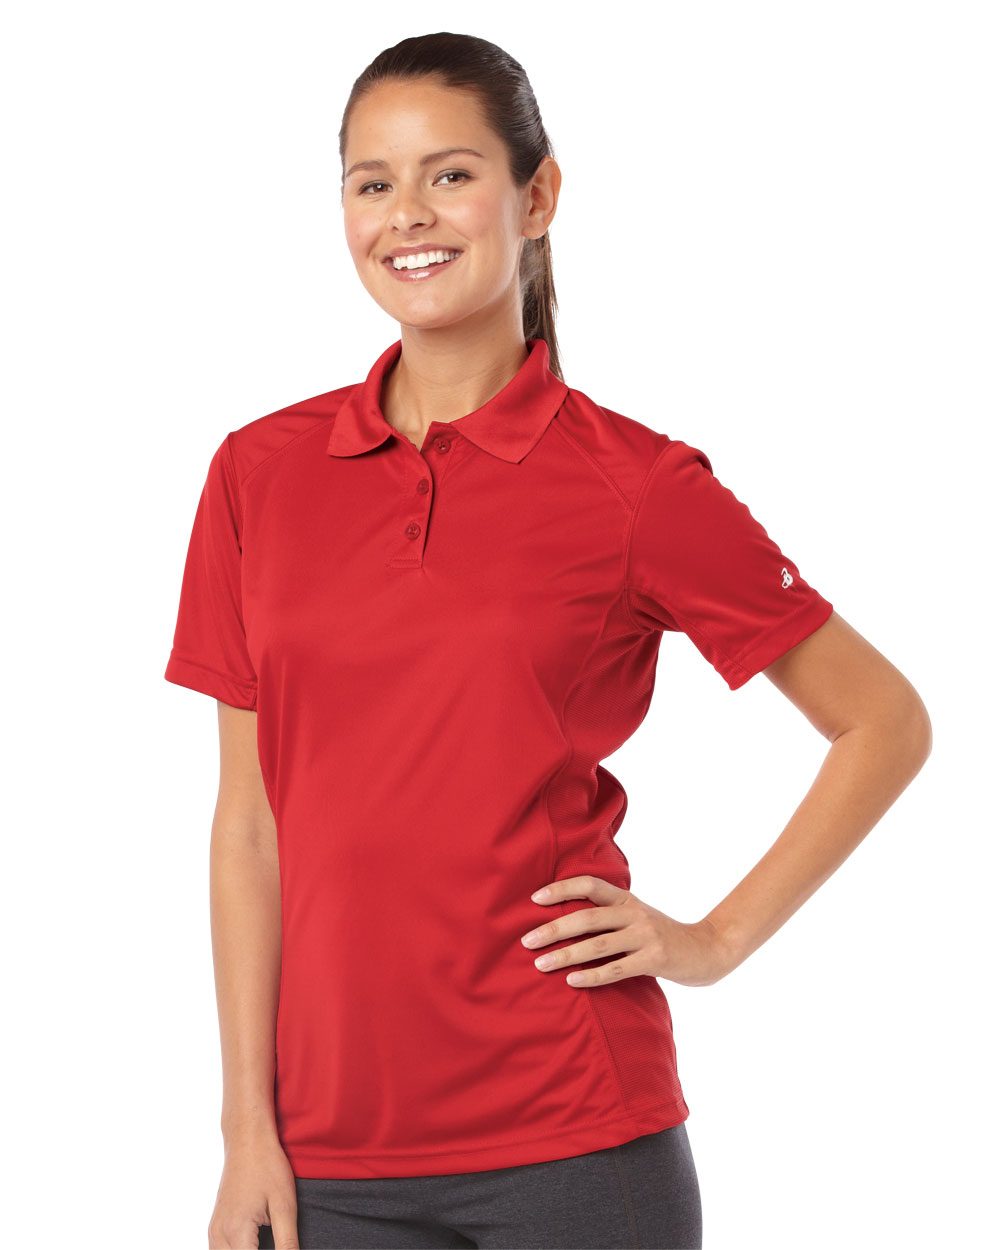 Badger 8440 - Ladies' BT5 Sport Shirt $19.95 - Polo/Sport Shirts